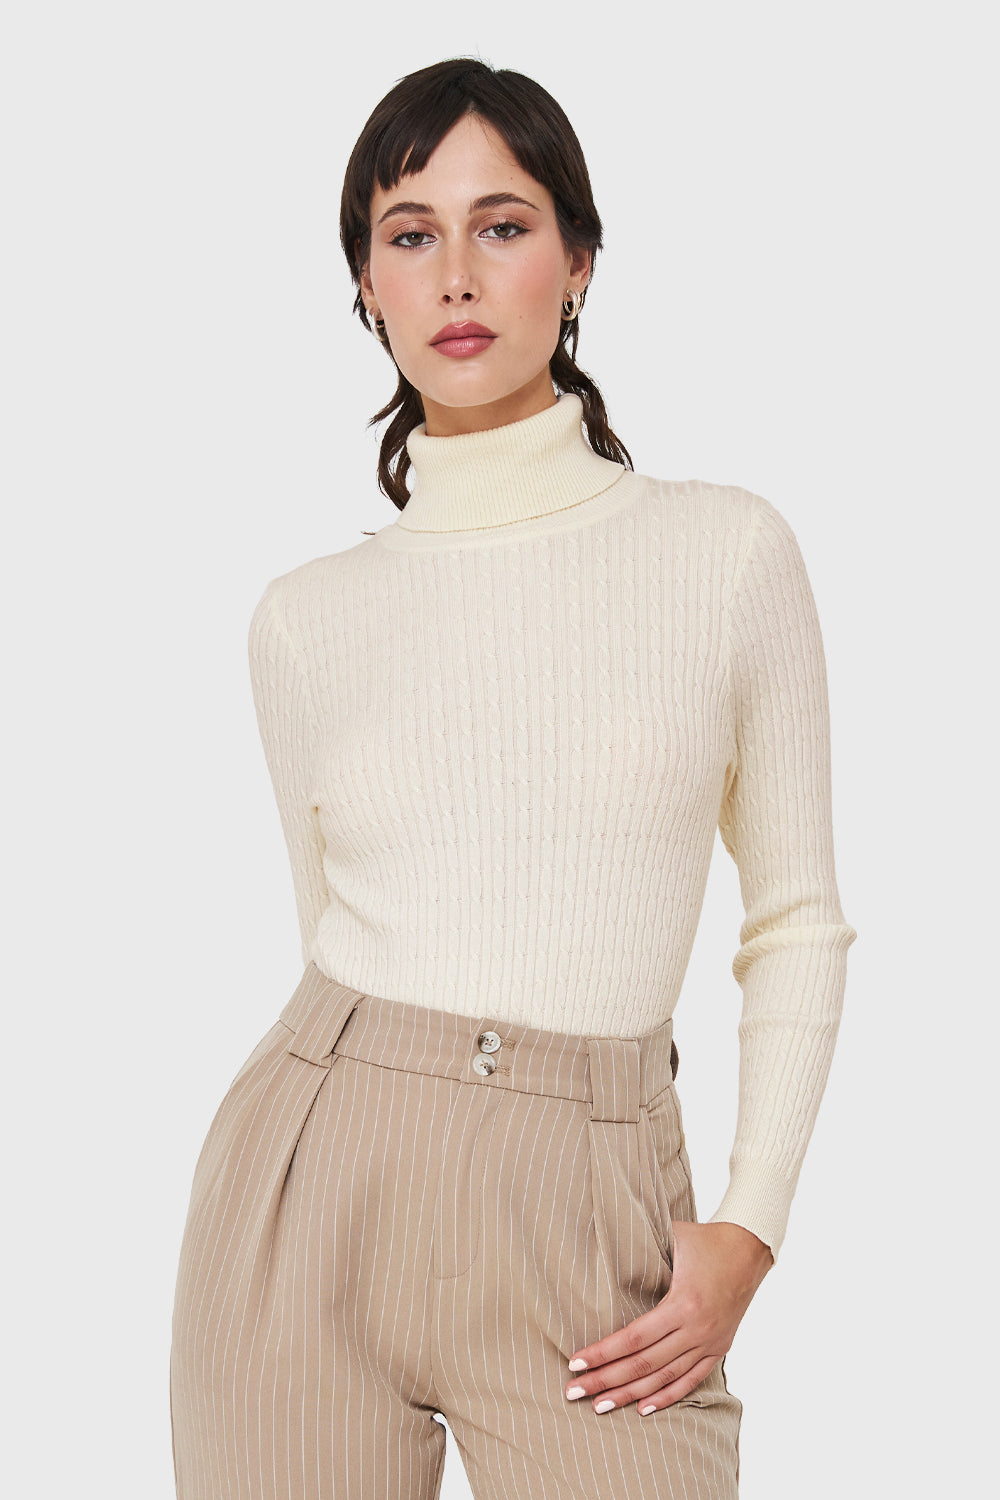 Sweater Tipo Cadenetas Blanco Invierno